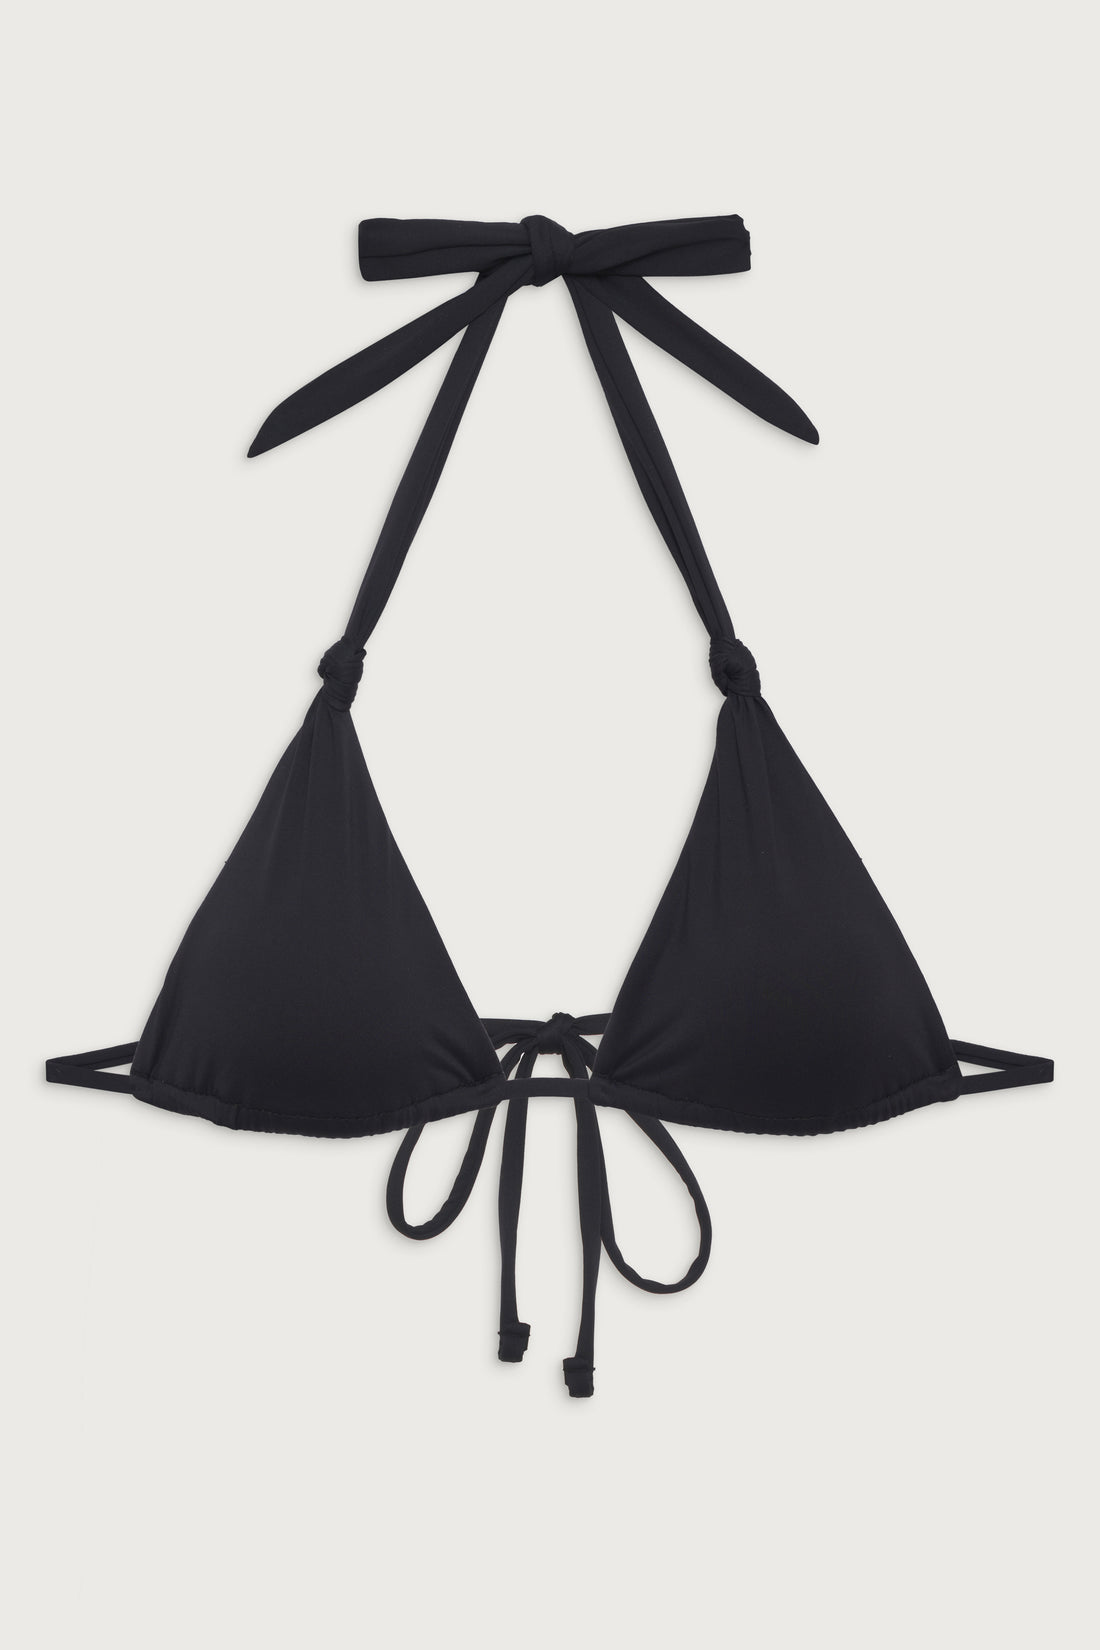 Frankies Bikinis Kealy Triangle Halter Bikini Top - Black